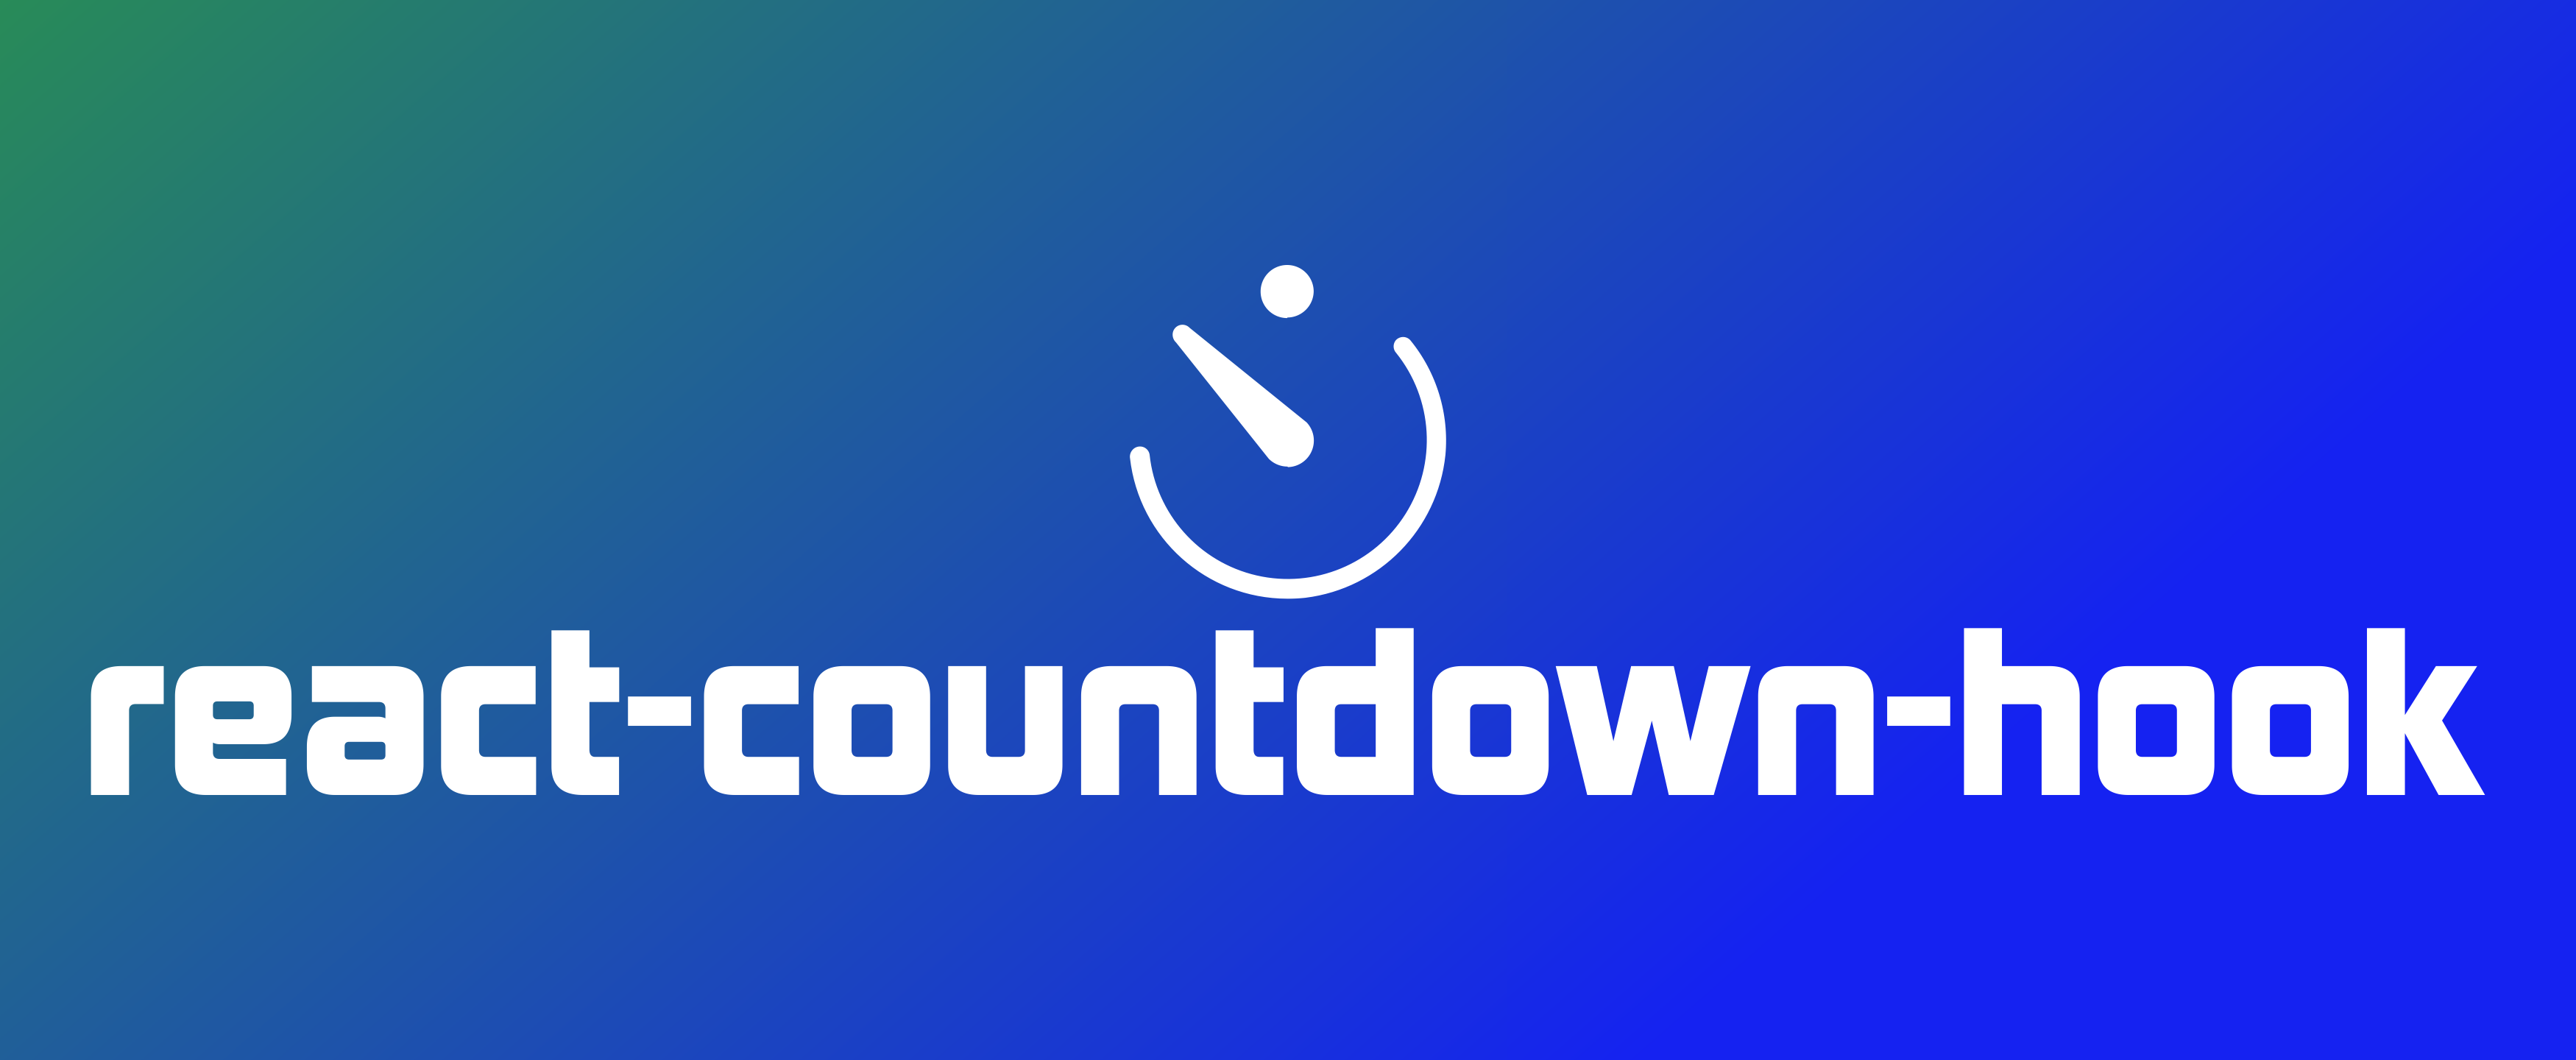 react-countdown-hook